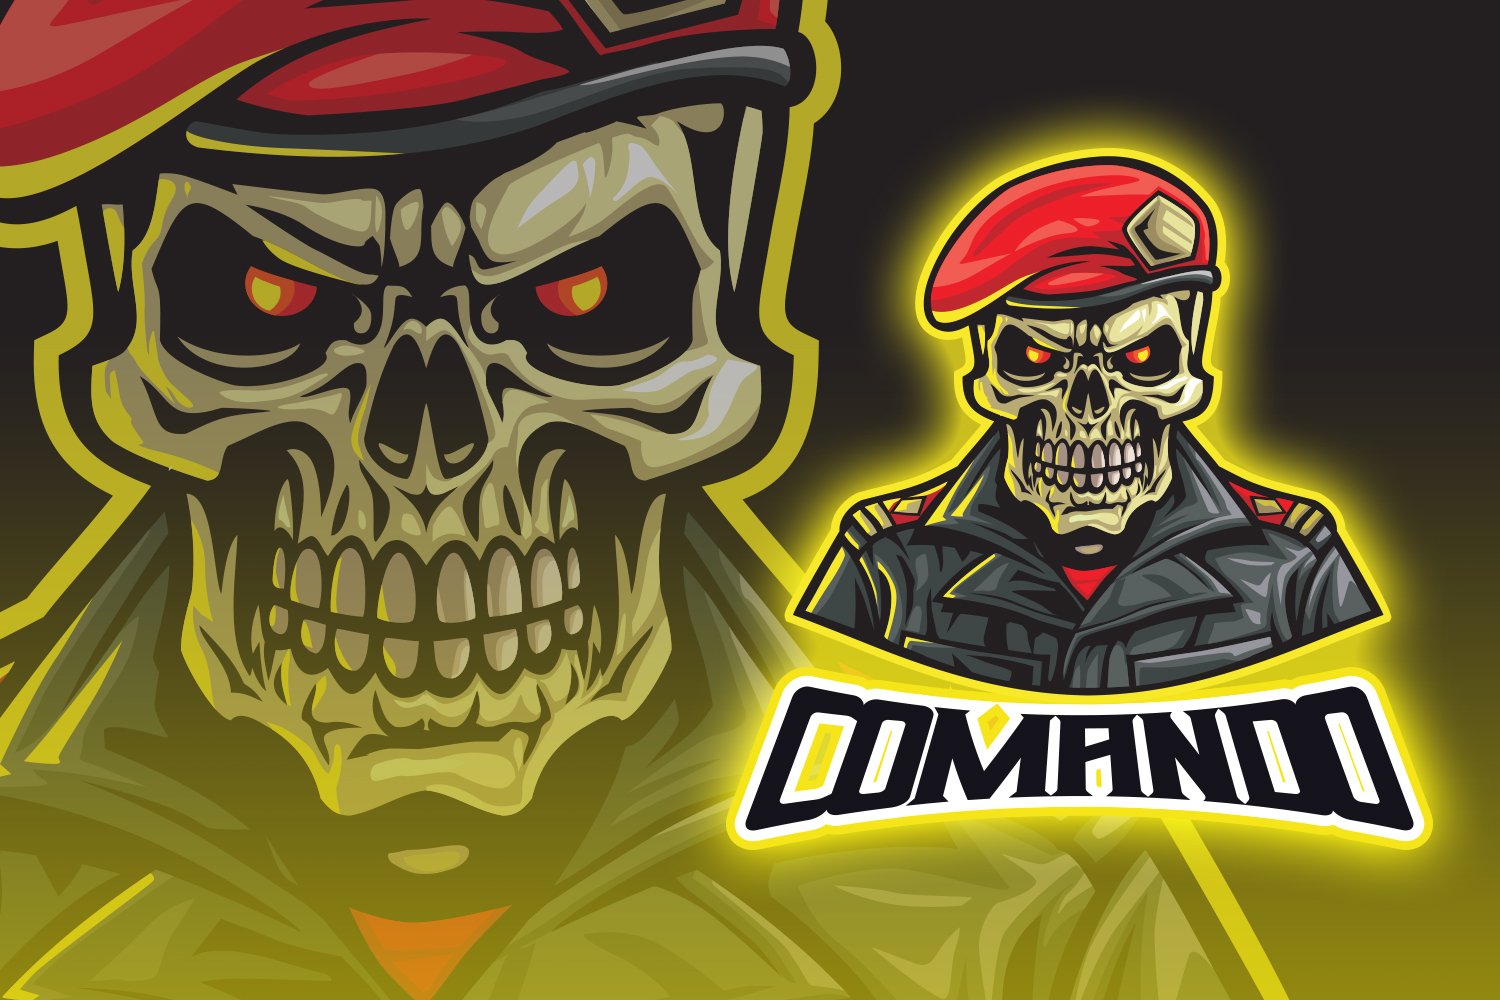 Skull Comando Esport Logo cover image.